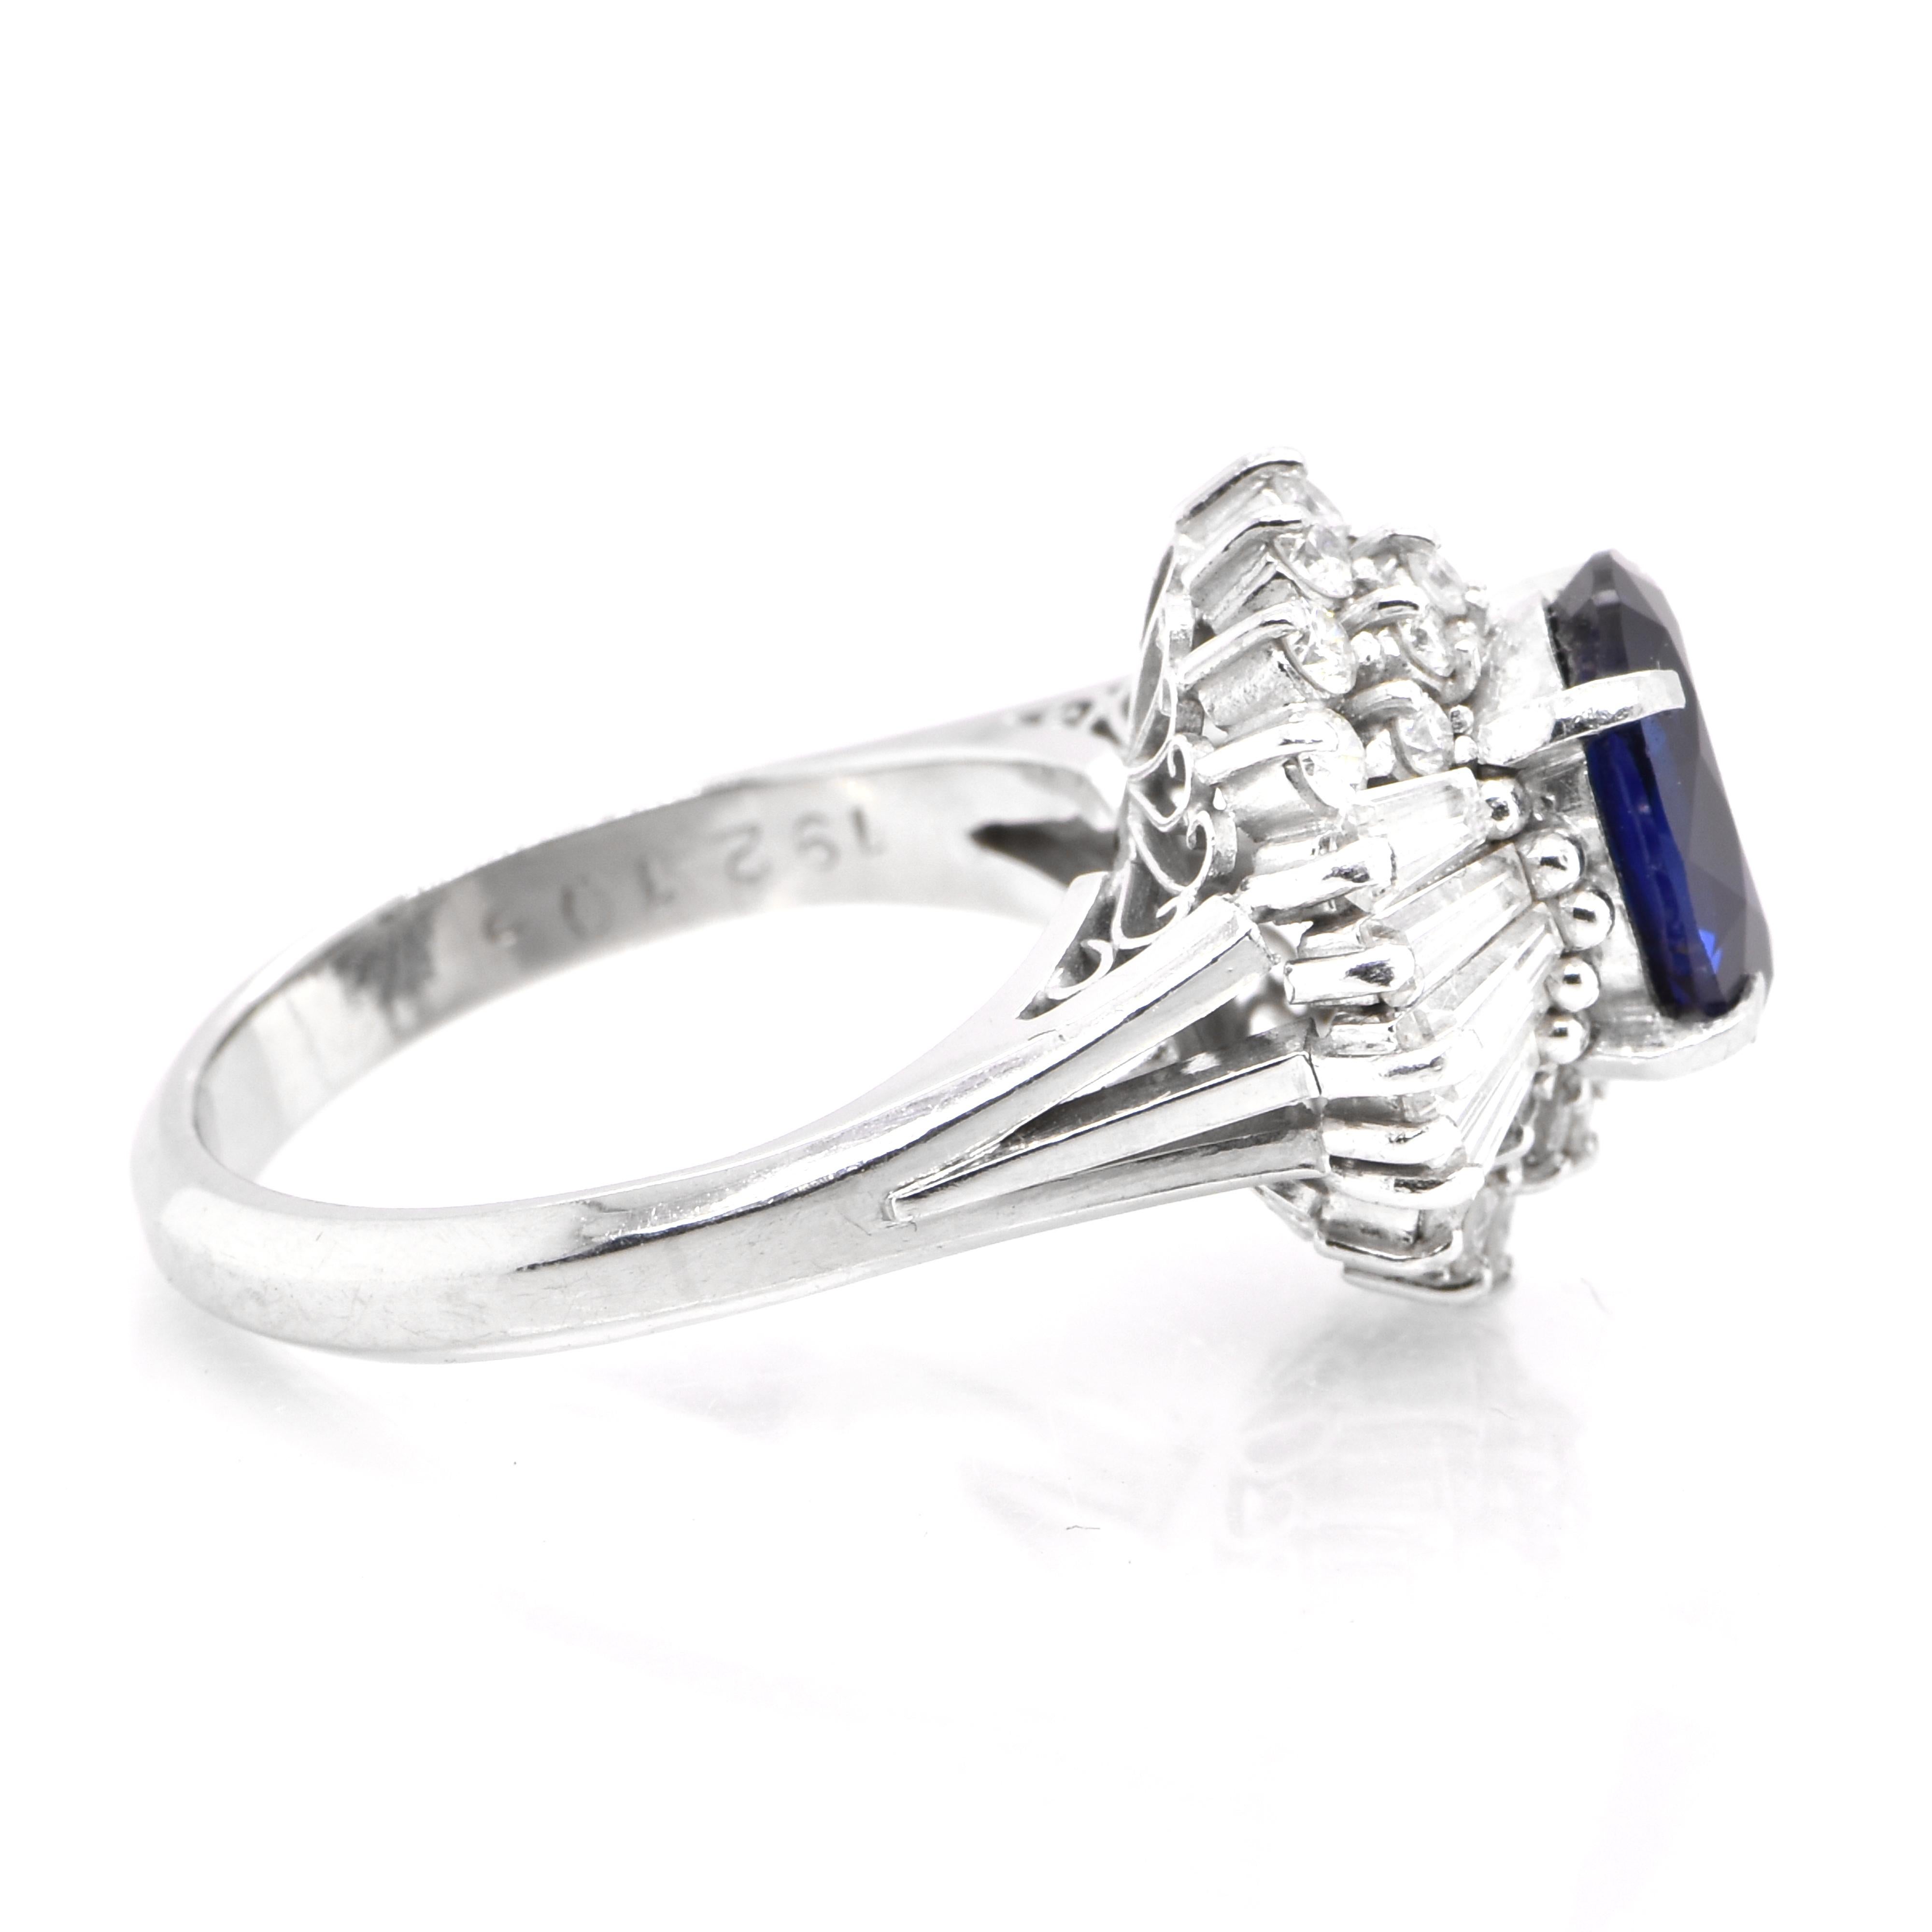 Oval Cut 1.92 Carat Natural Royal Blue Sapphire & Diamond Ballerina Ring set in Platinum